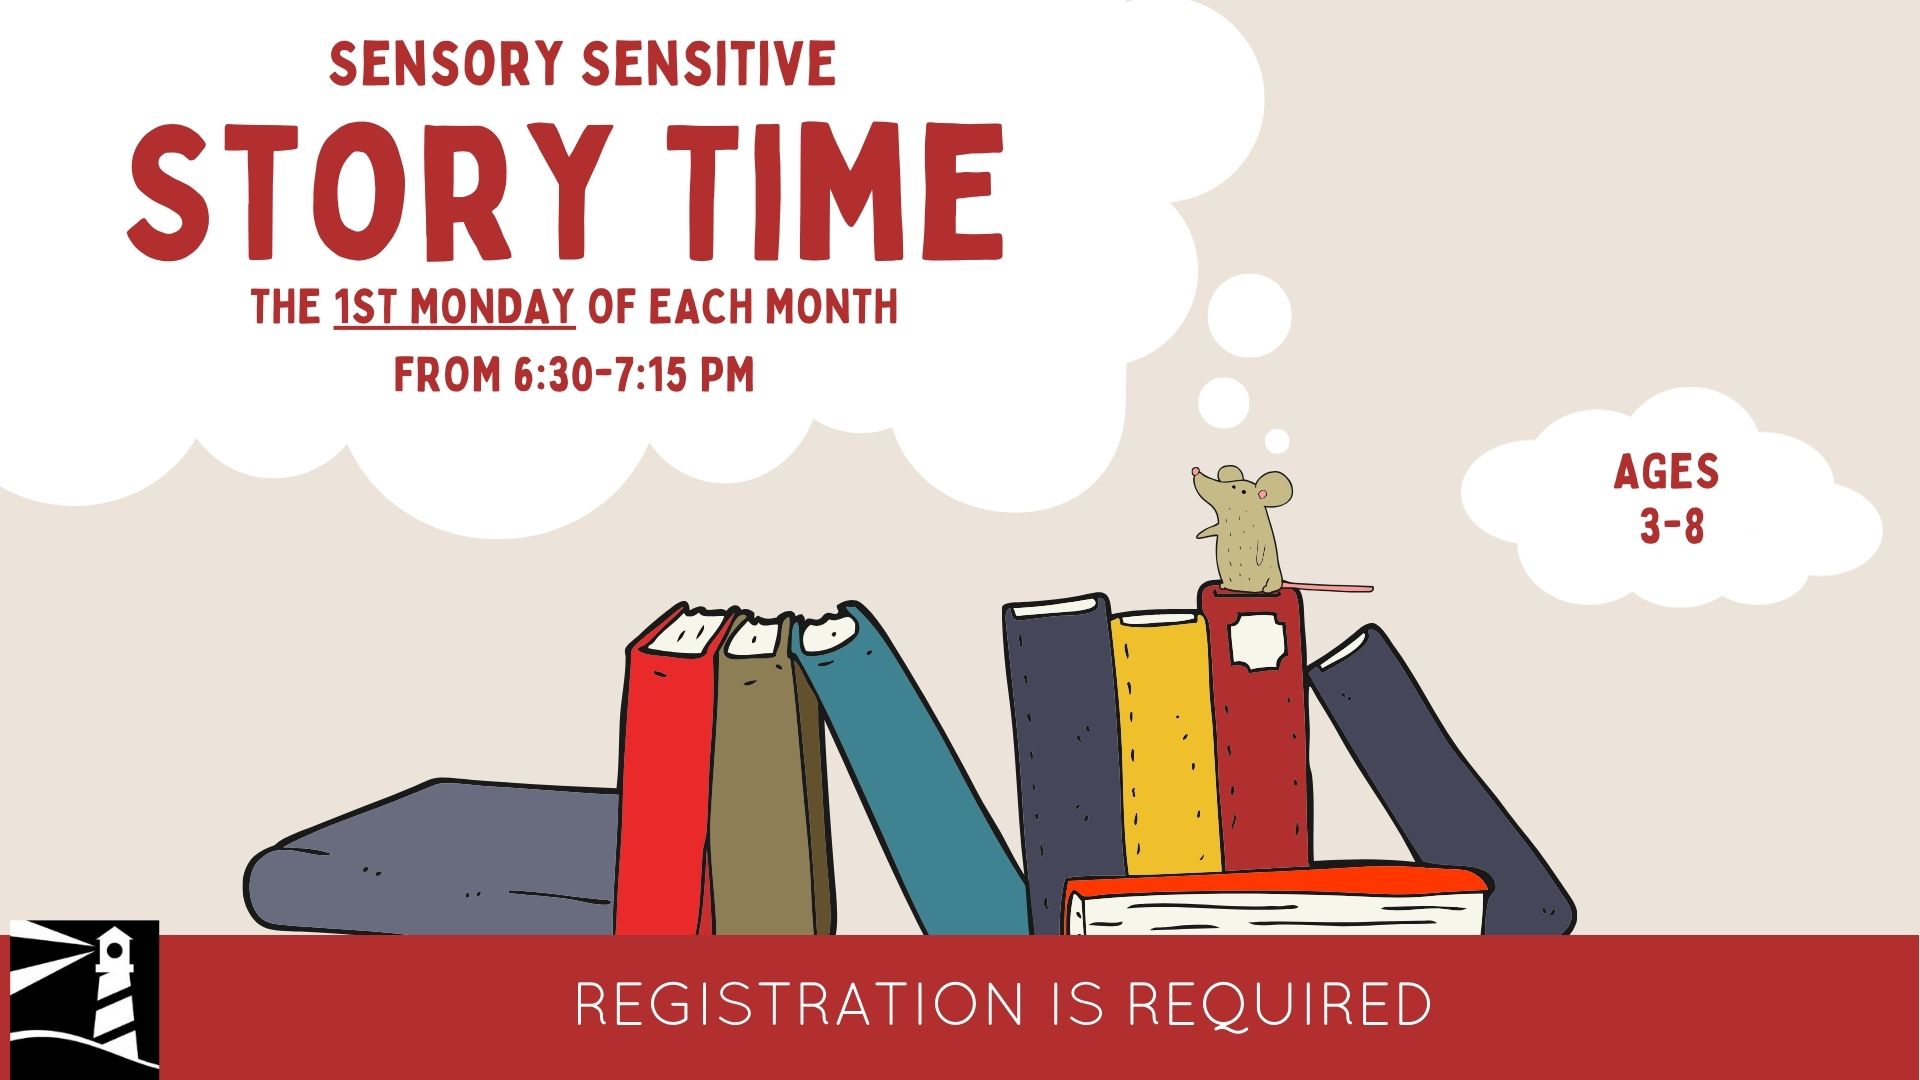 Sensory Sensitive Story Time